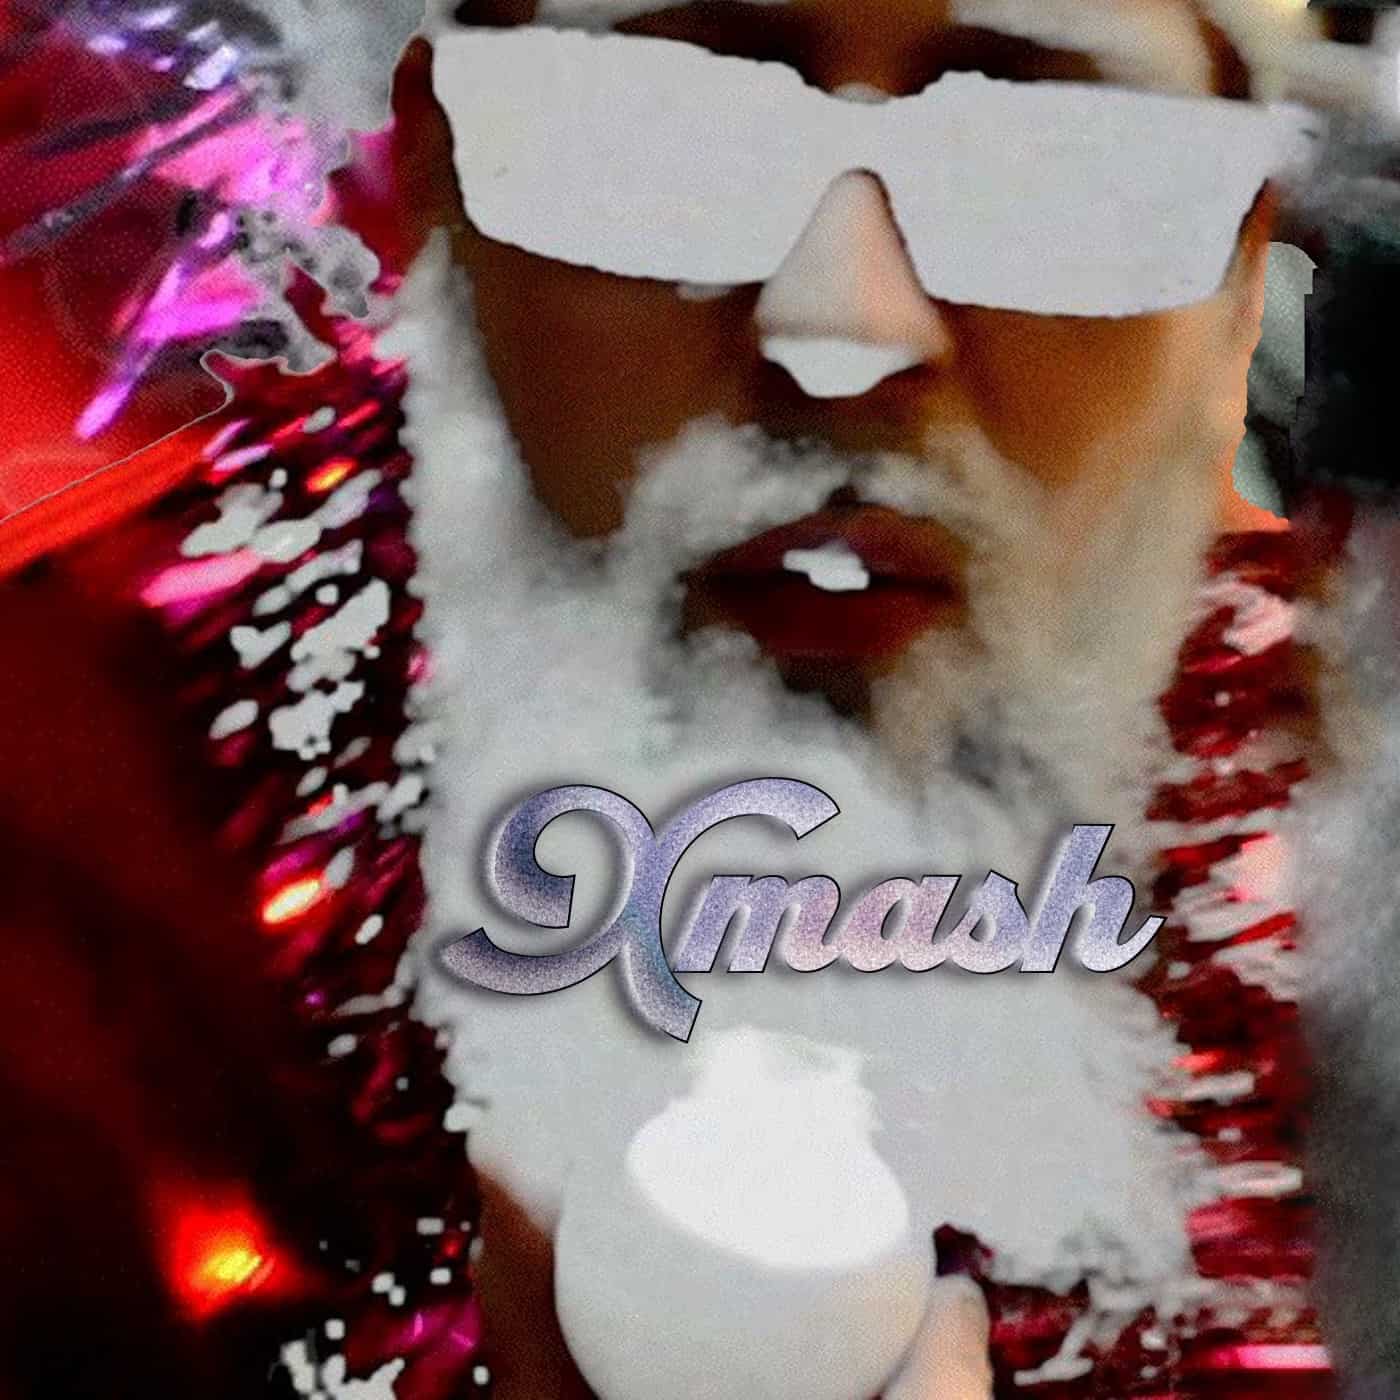 Xmash Christmas mashup compilation from Instamatic, DJNoNo and tbc